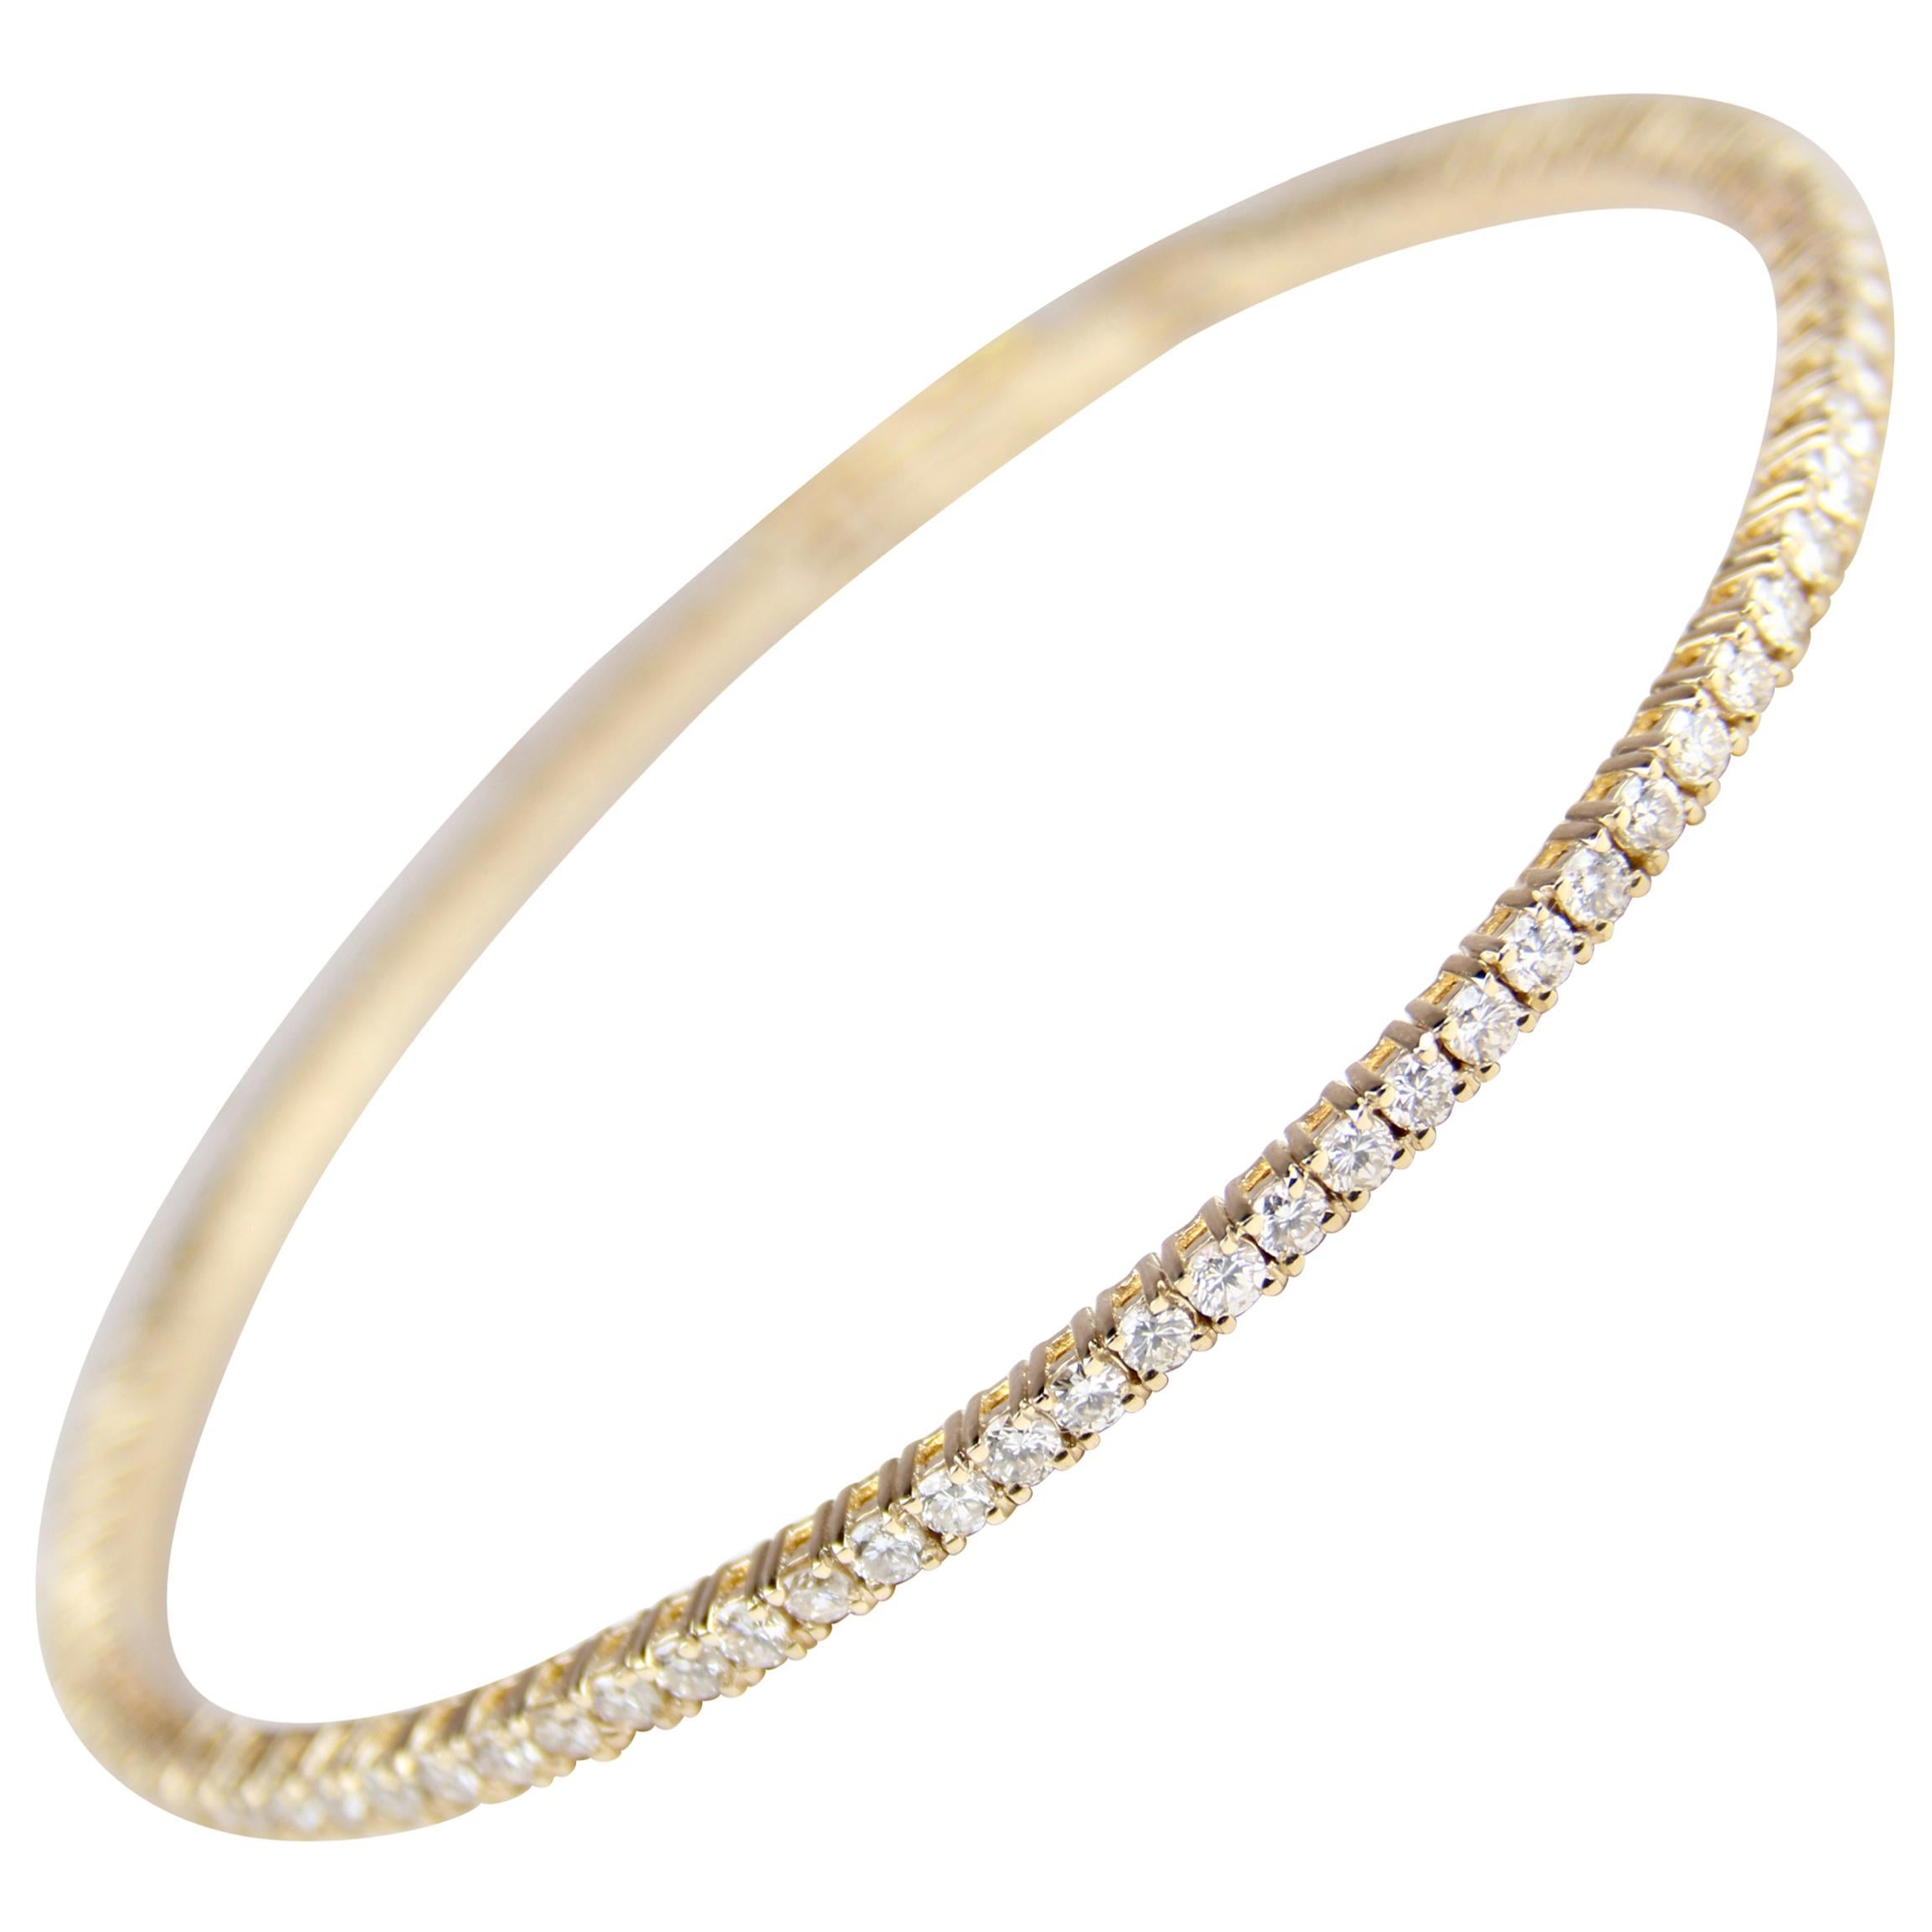 Yellow Gold and Diamond Flexible Bangle Bracelet